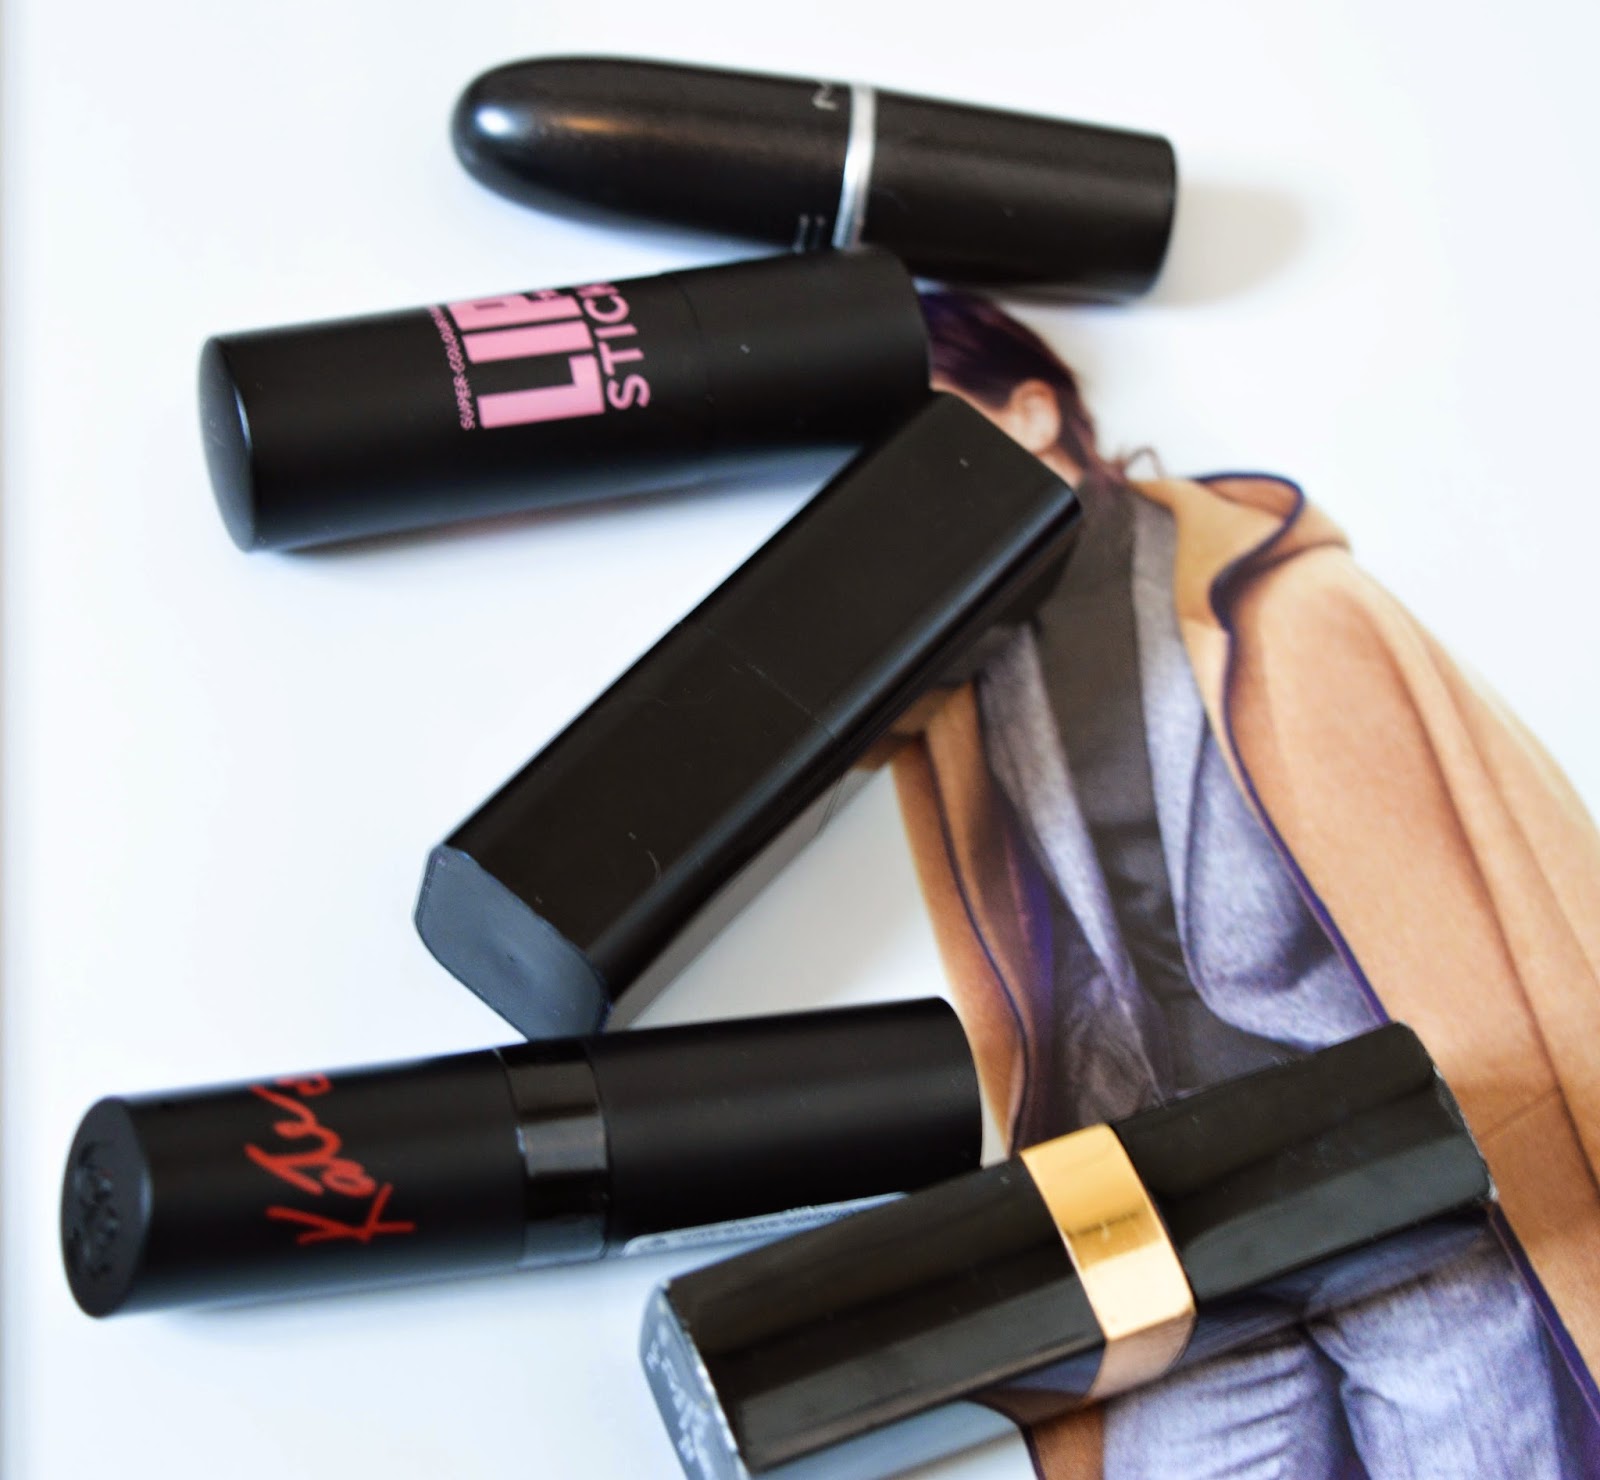 five lipsticks including Channel, Mac, Soap & Glory, Rimmel Kate Moss and Calvin Klien